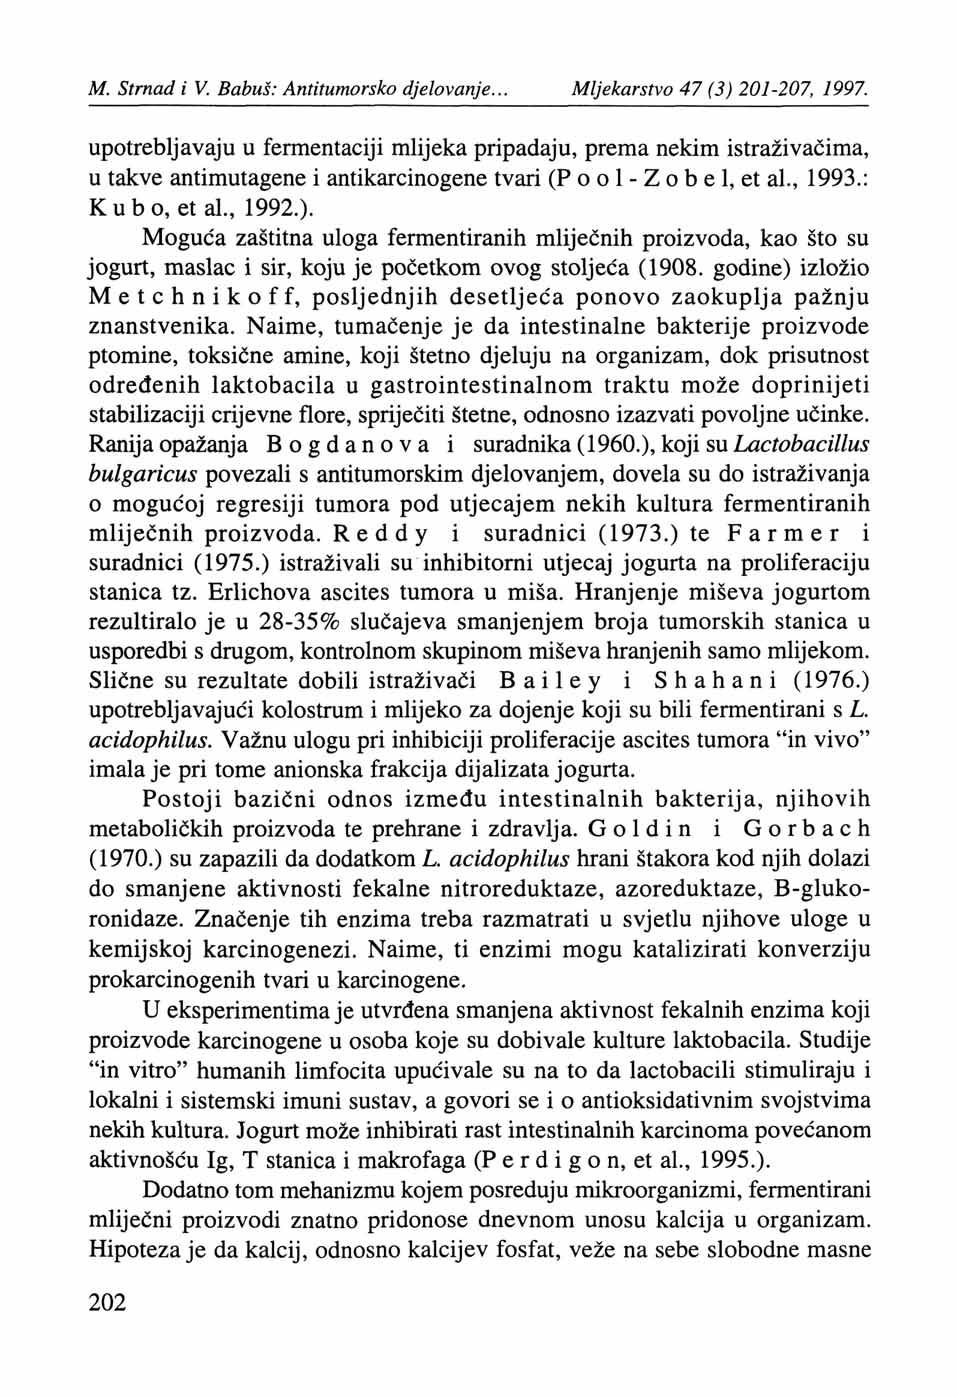 M Strnad i V. Babuš: Antitumorsko djelovanje... Mljekarstvo 47 (3) 201-207, 1997.